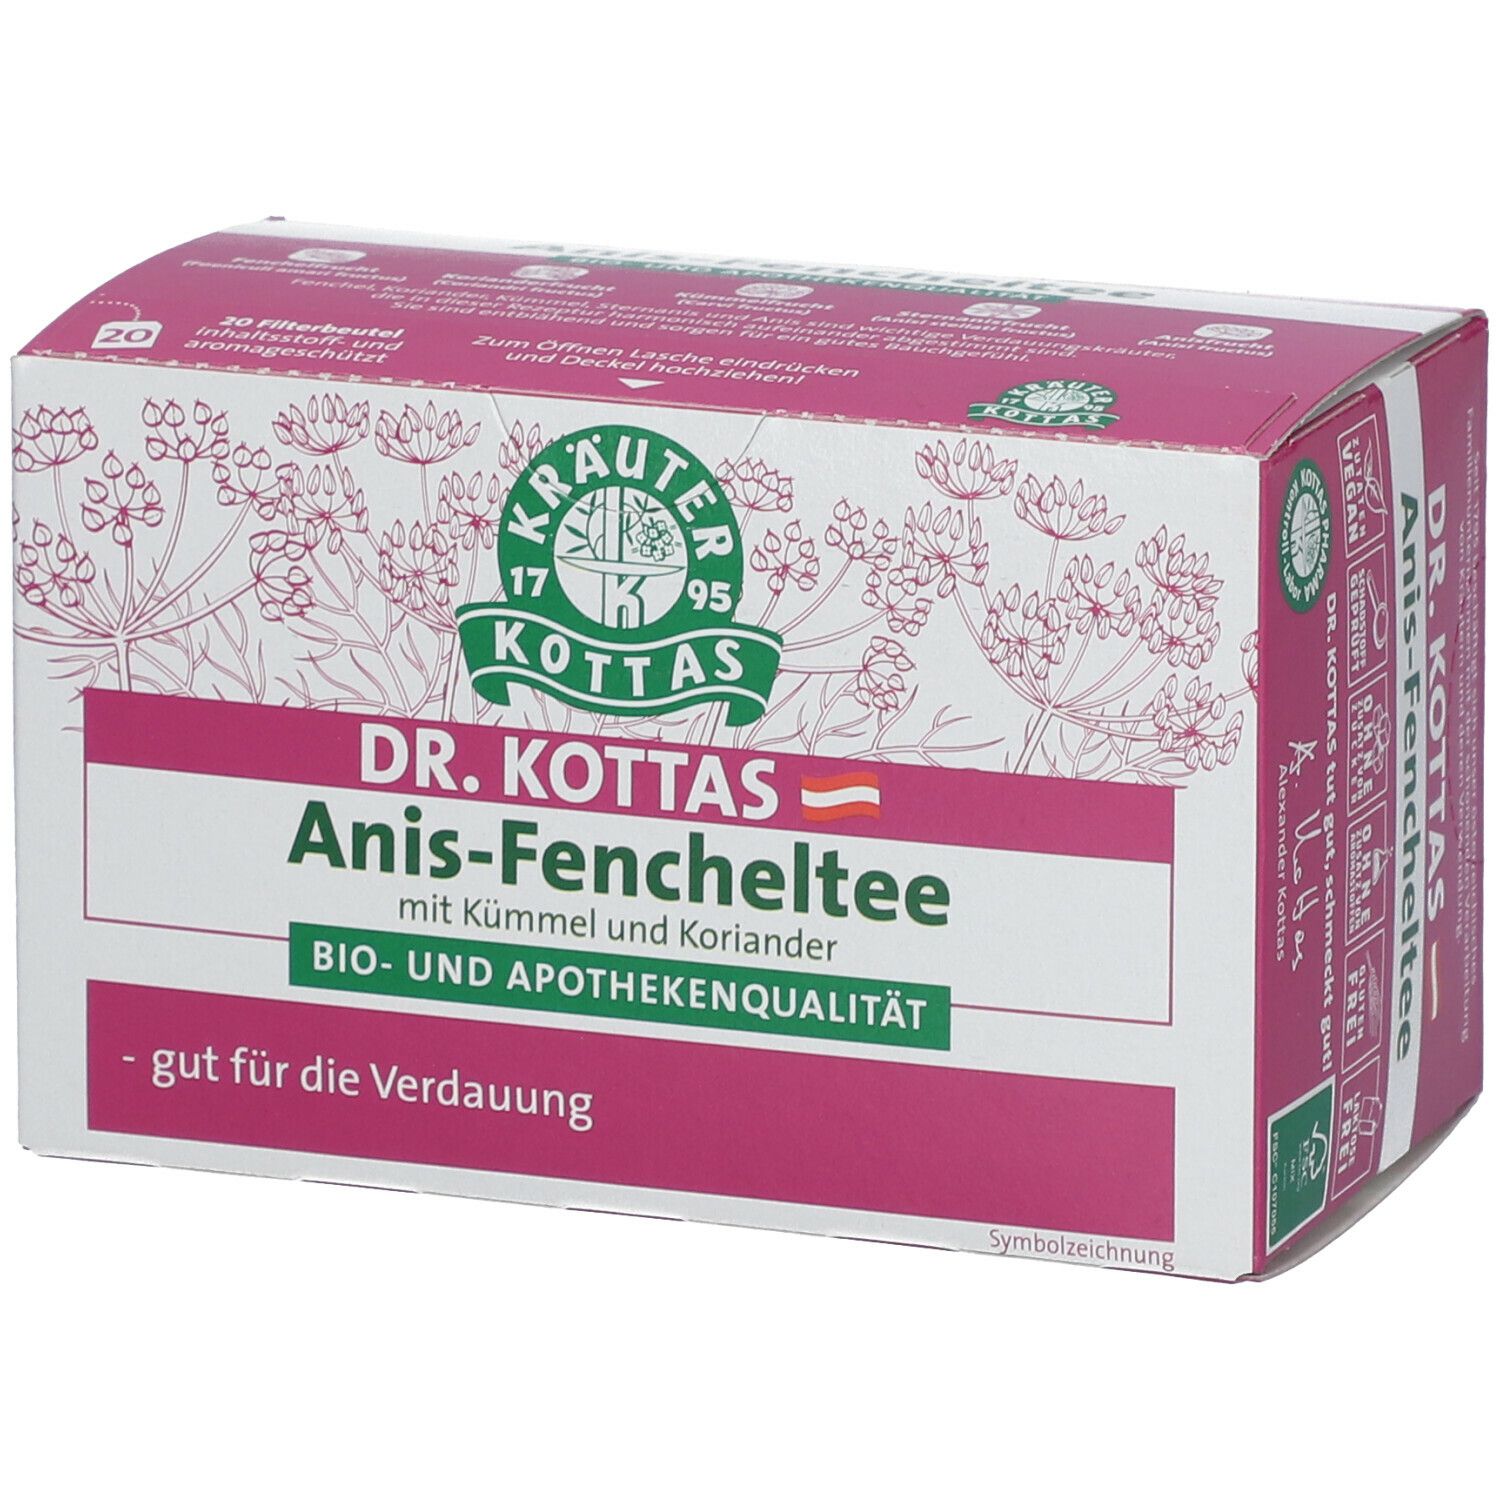 Dr. Kottas Anis-Fenchel-tee